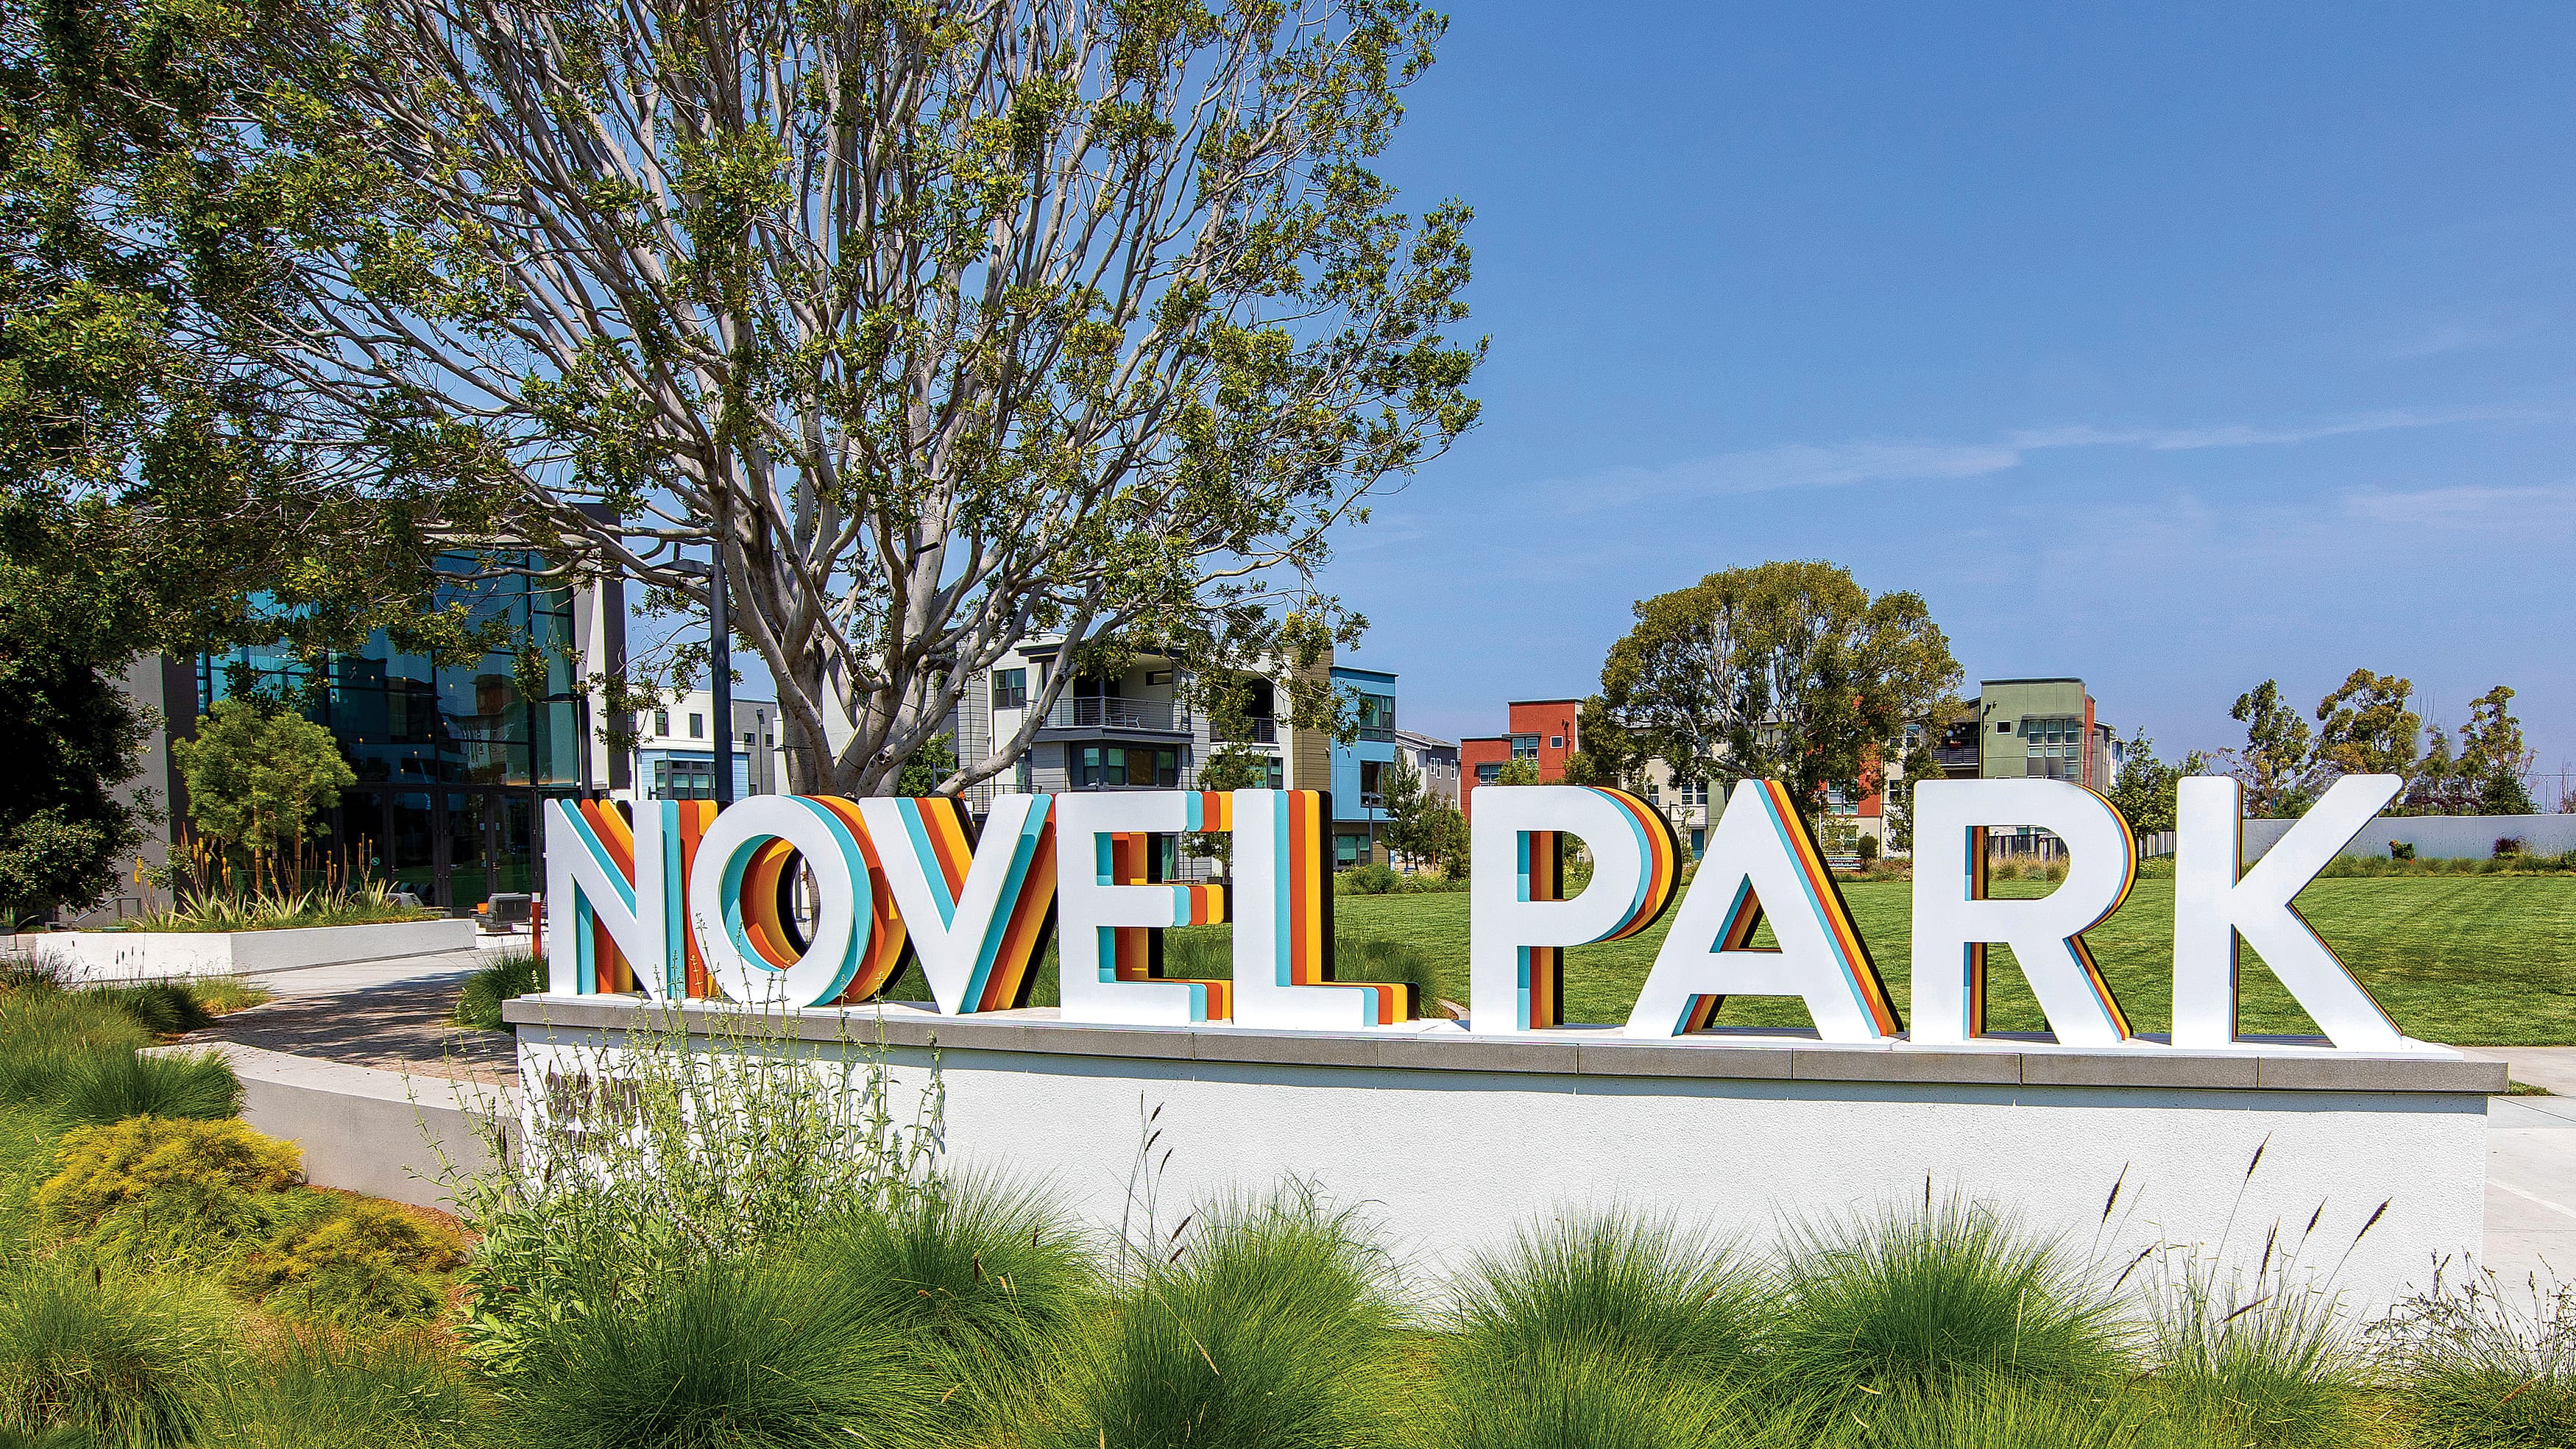 Multi-colored identity sign design at Novel Park in Irvine, California.